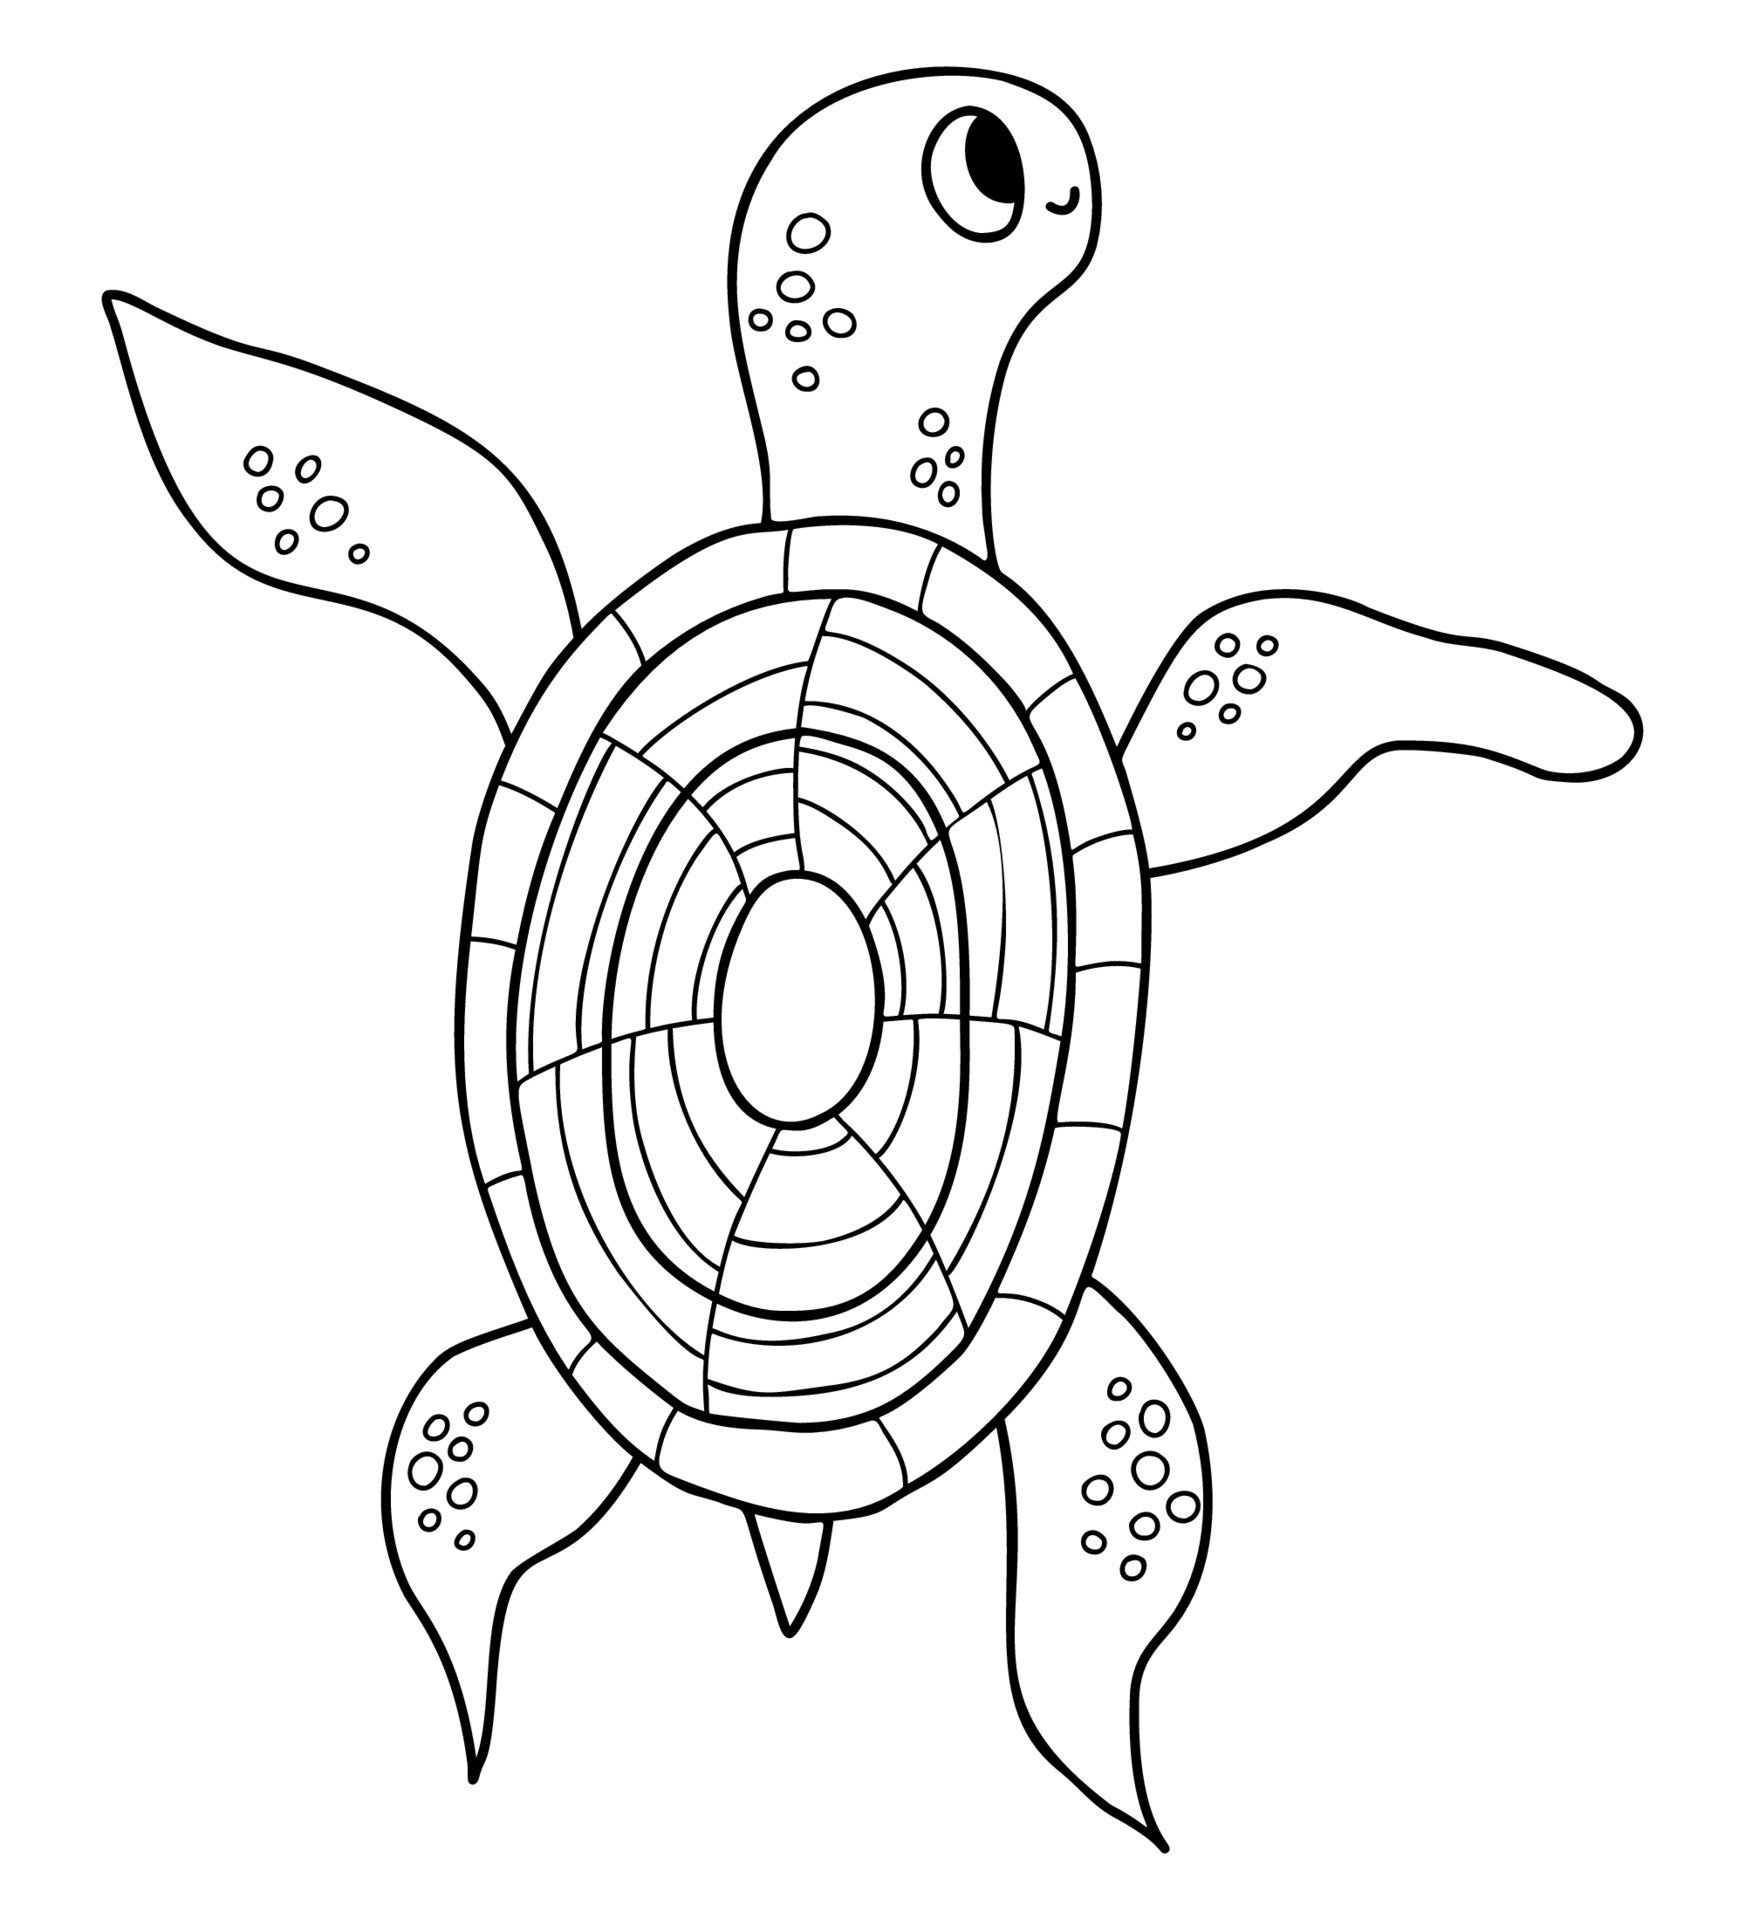 Cute turtle. Vector illustration. Outline drawing cartoon animal